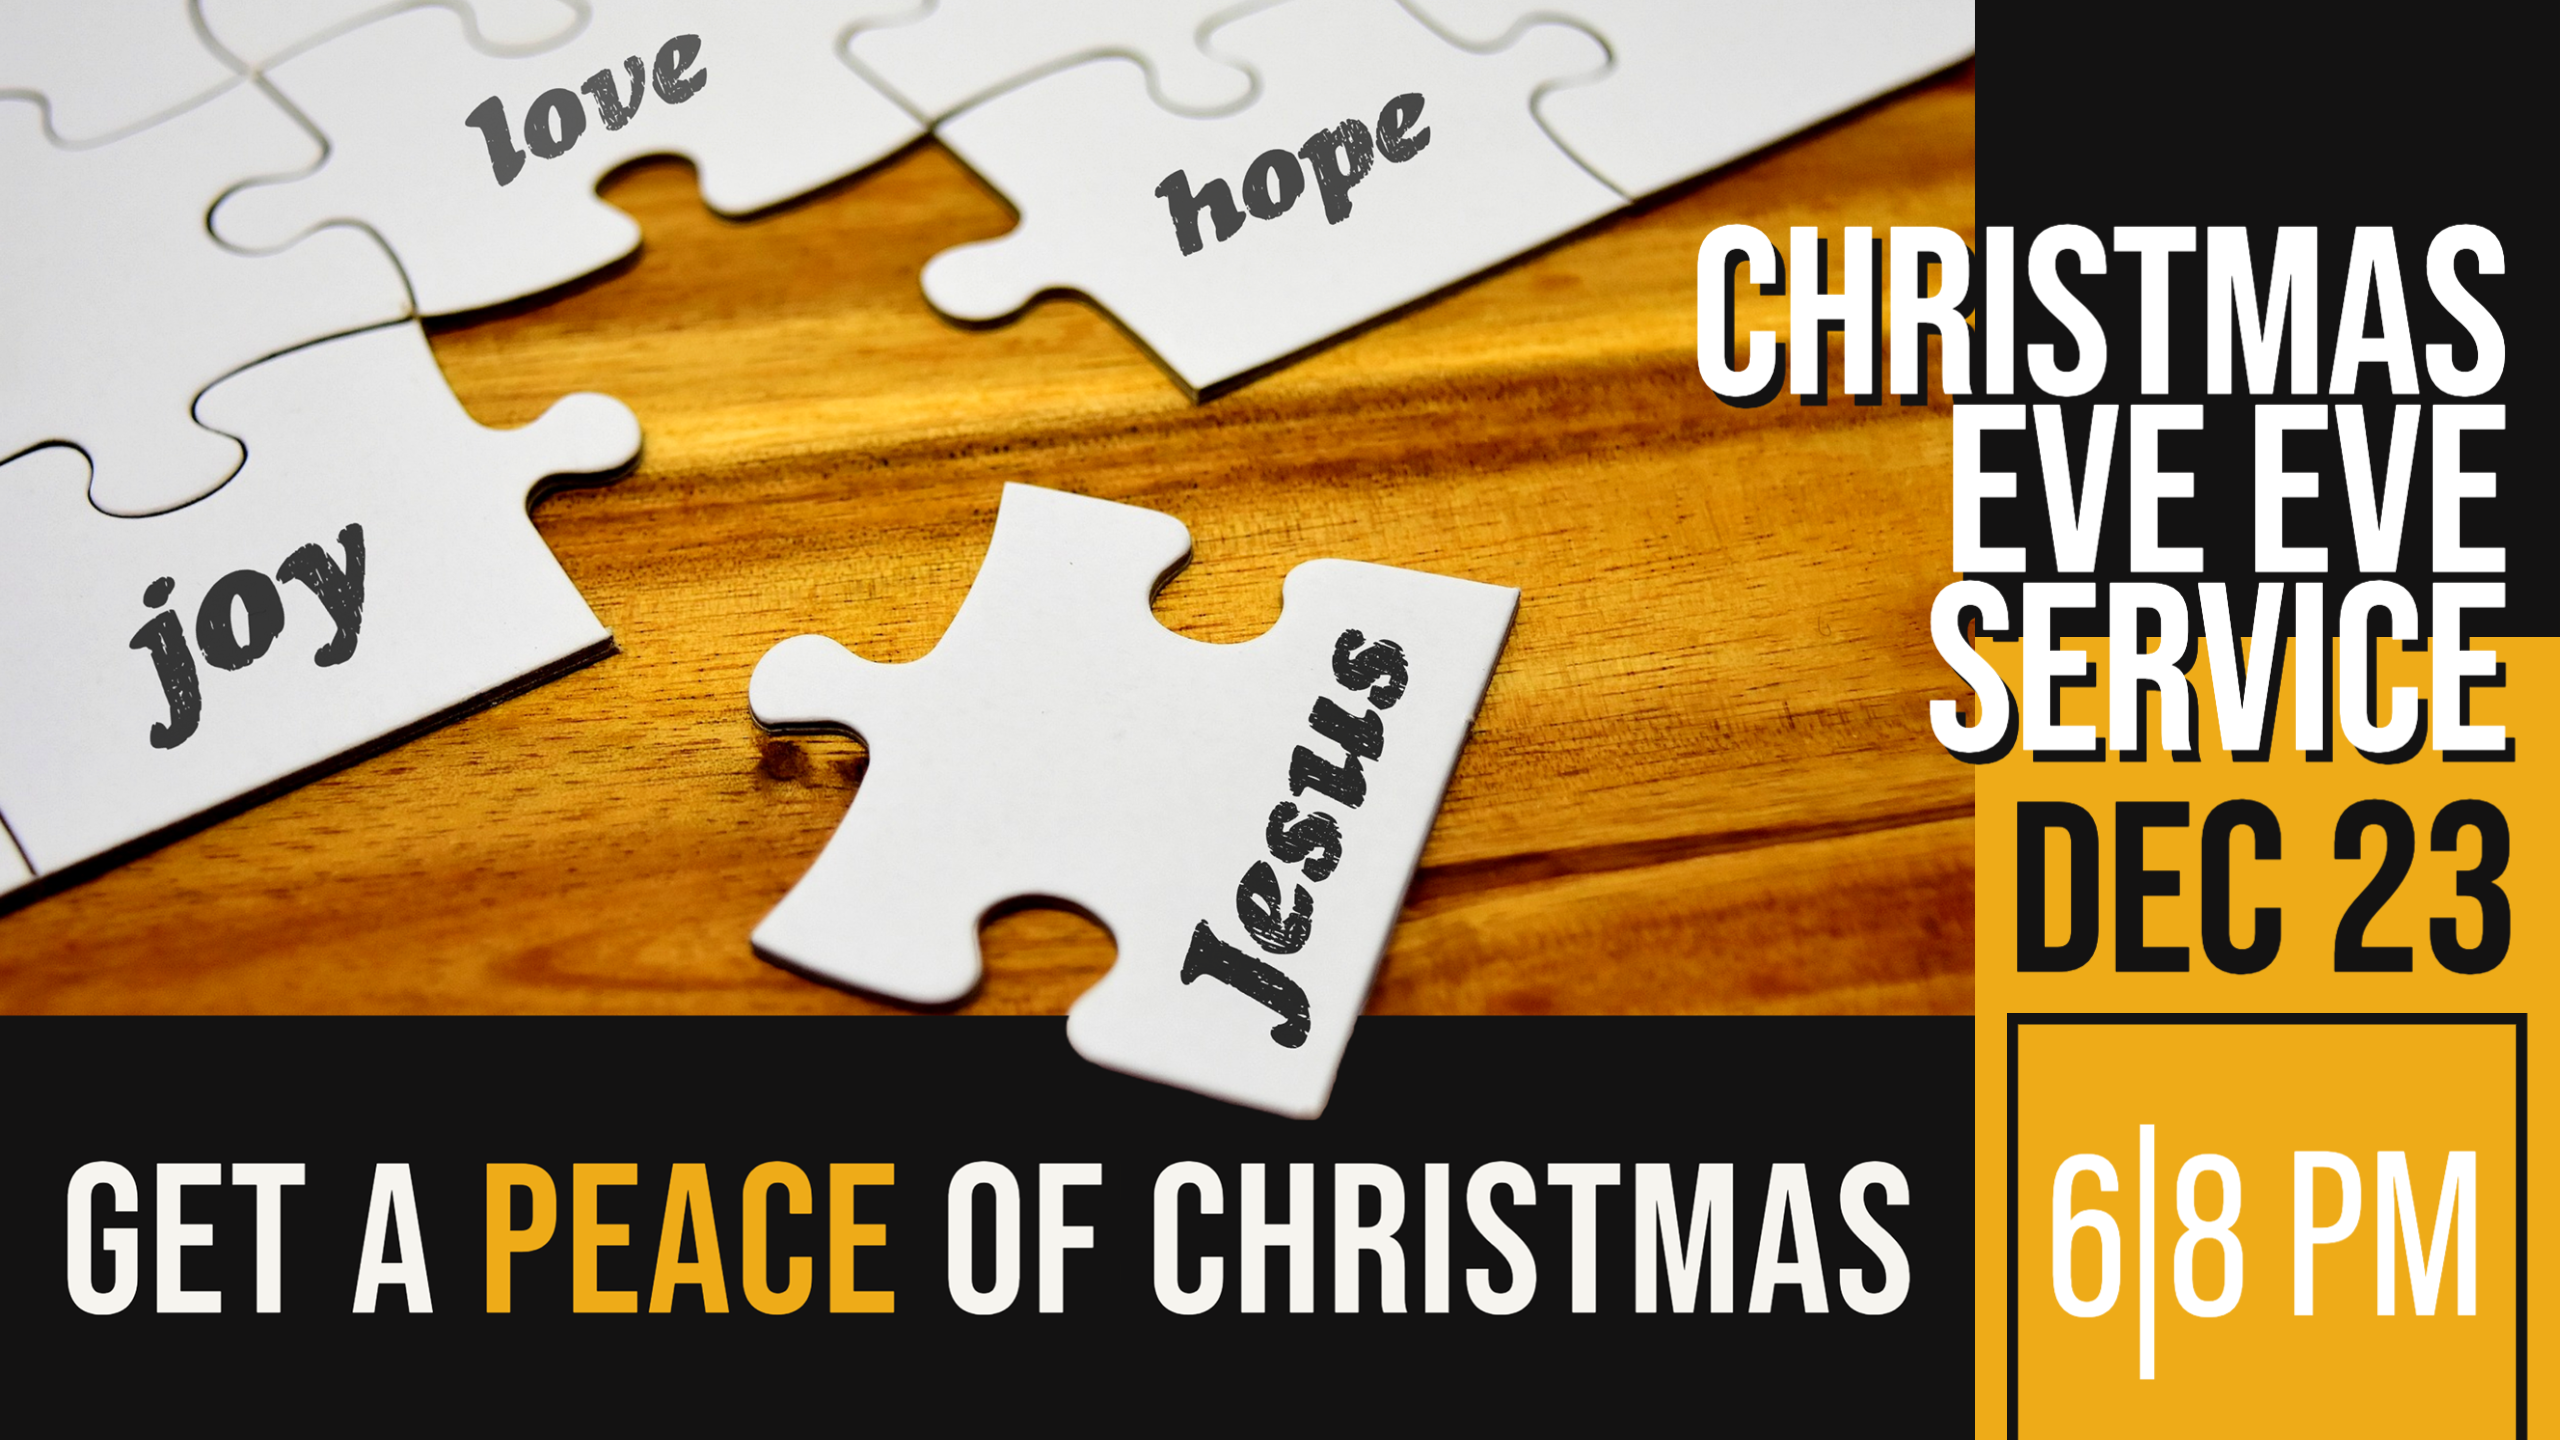 Christmas Eve Eve Service - Get a PEACE of Christmas